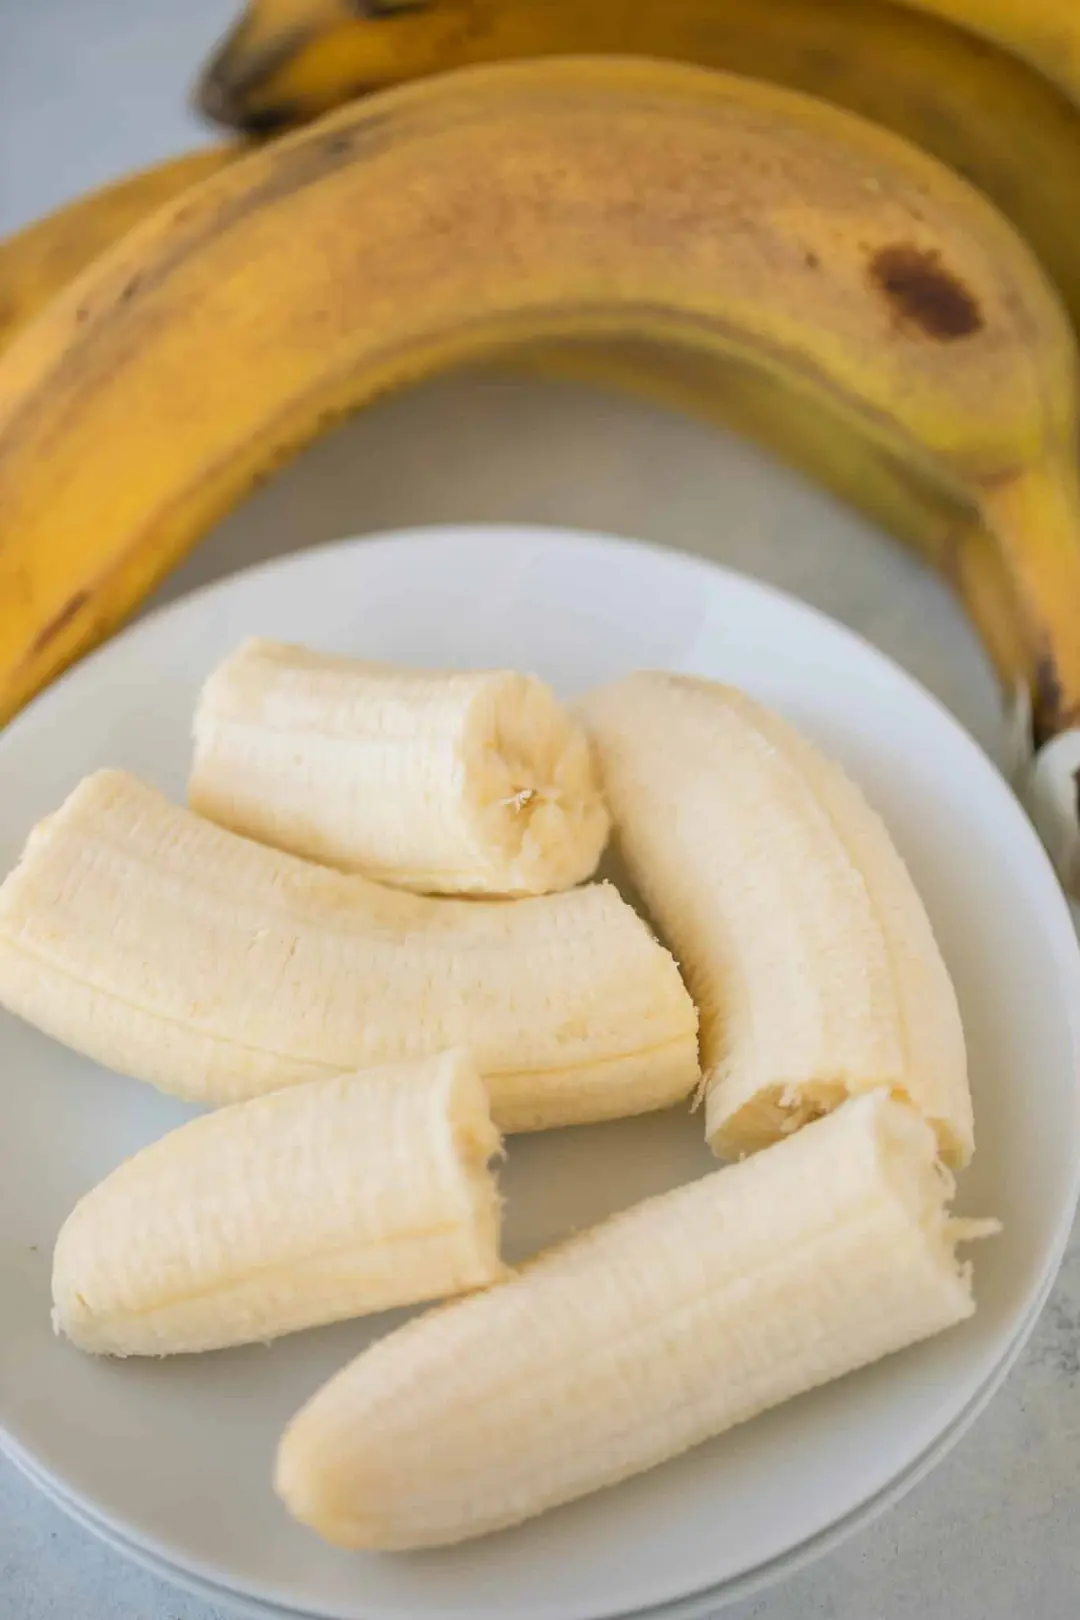 Freeze Bananas in Large Chunks